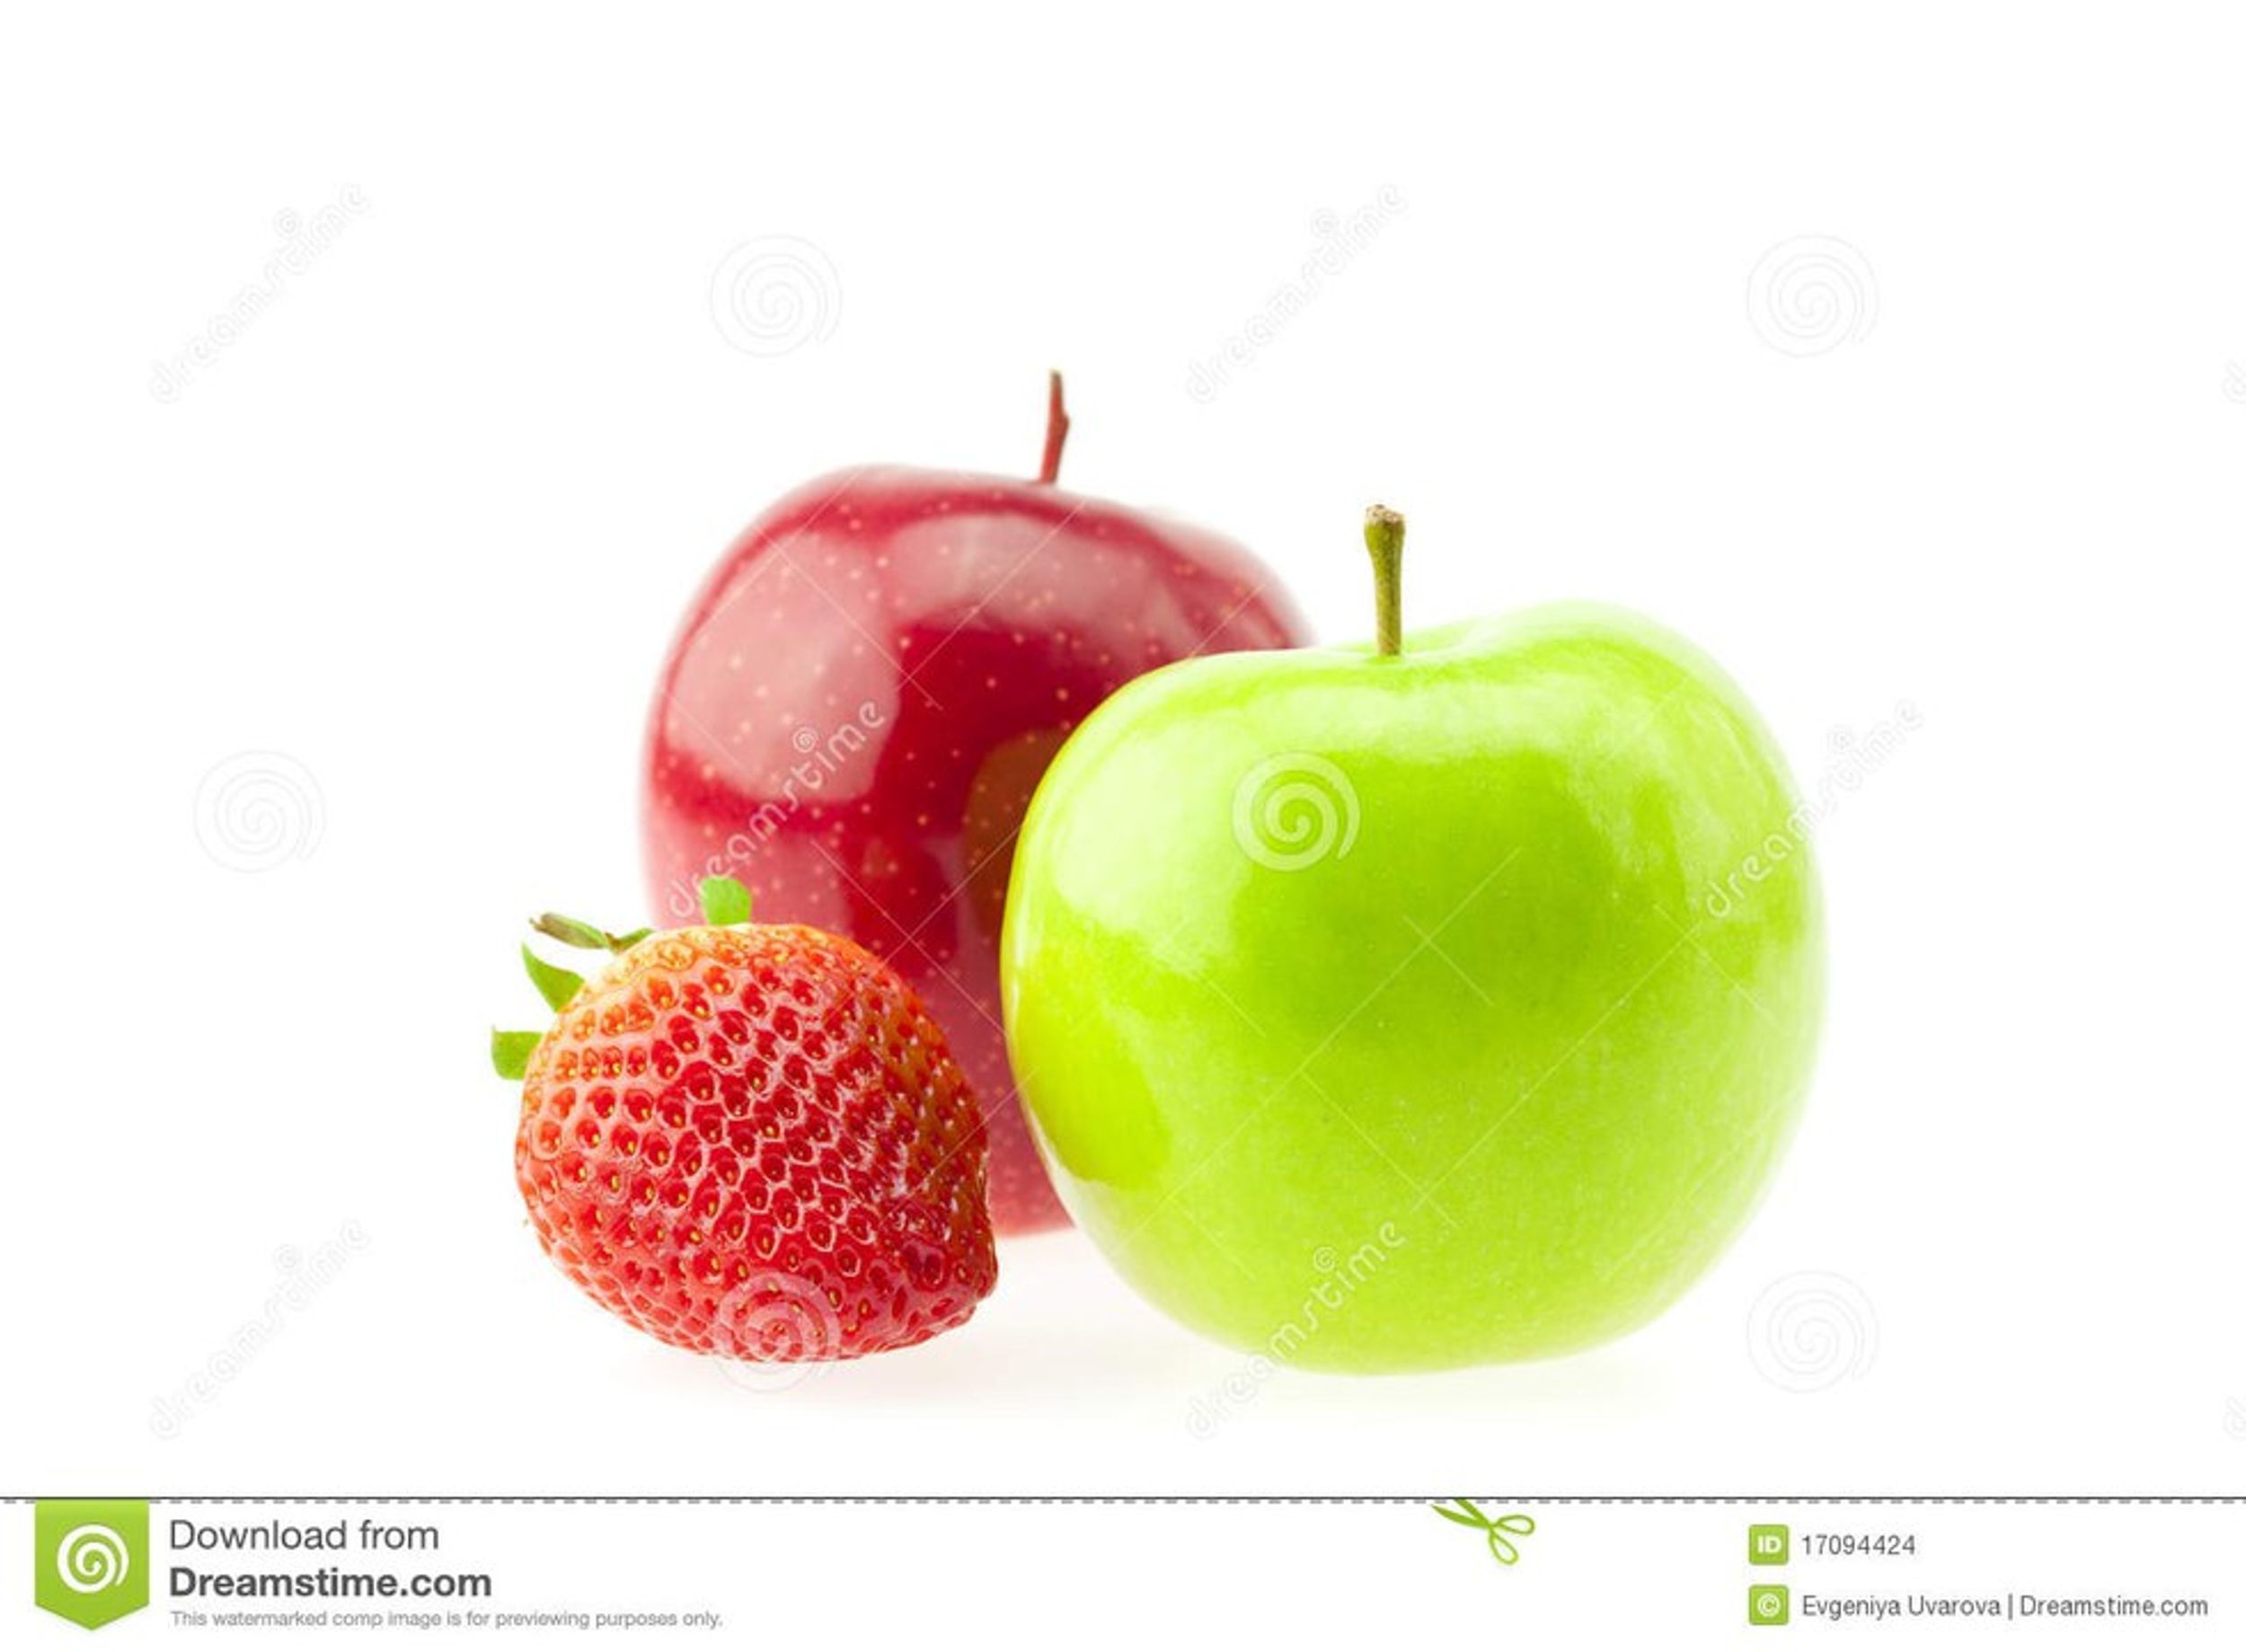 Strawberries vs. Apples